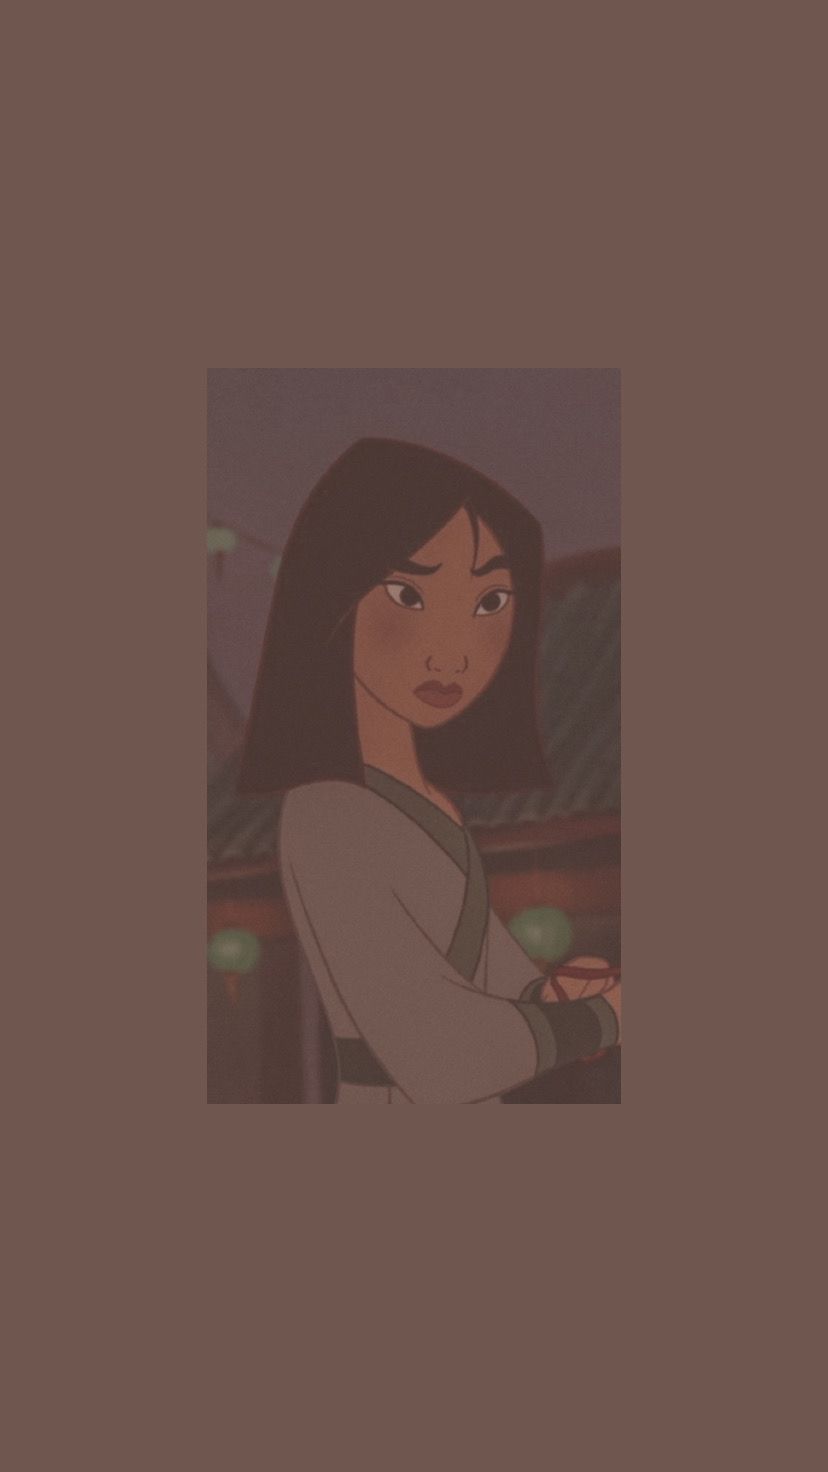 A portrait of Mulan from Disney's Mulan movie. - Mulan